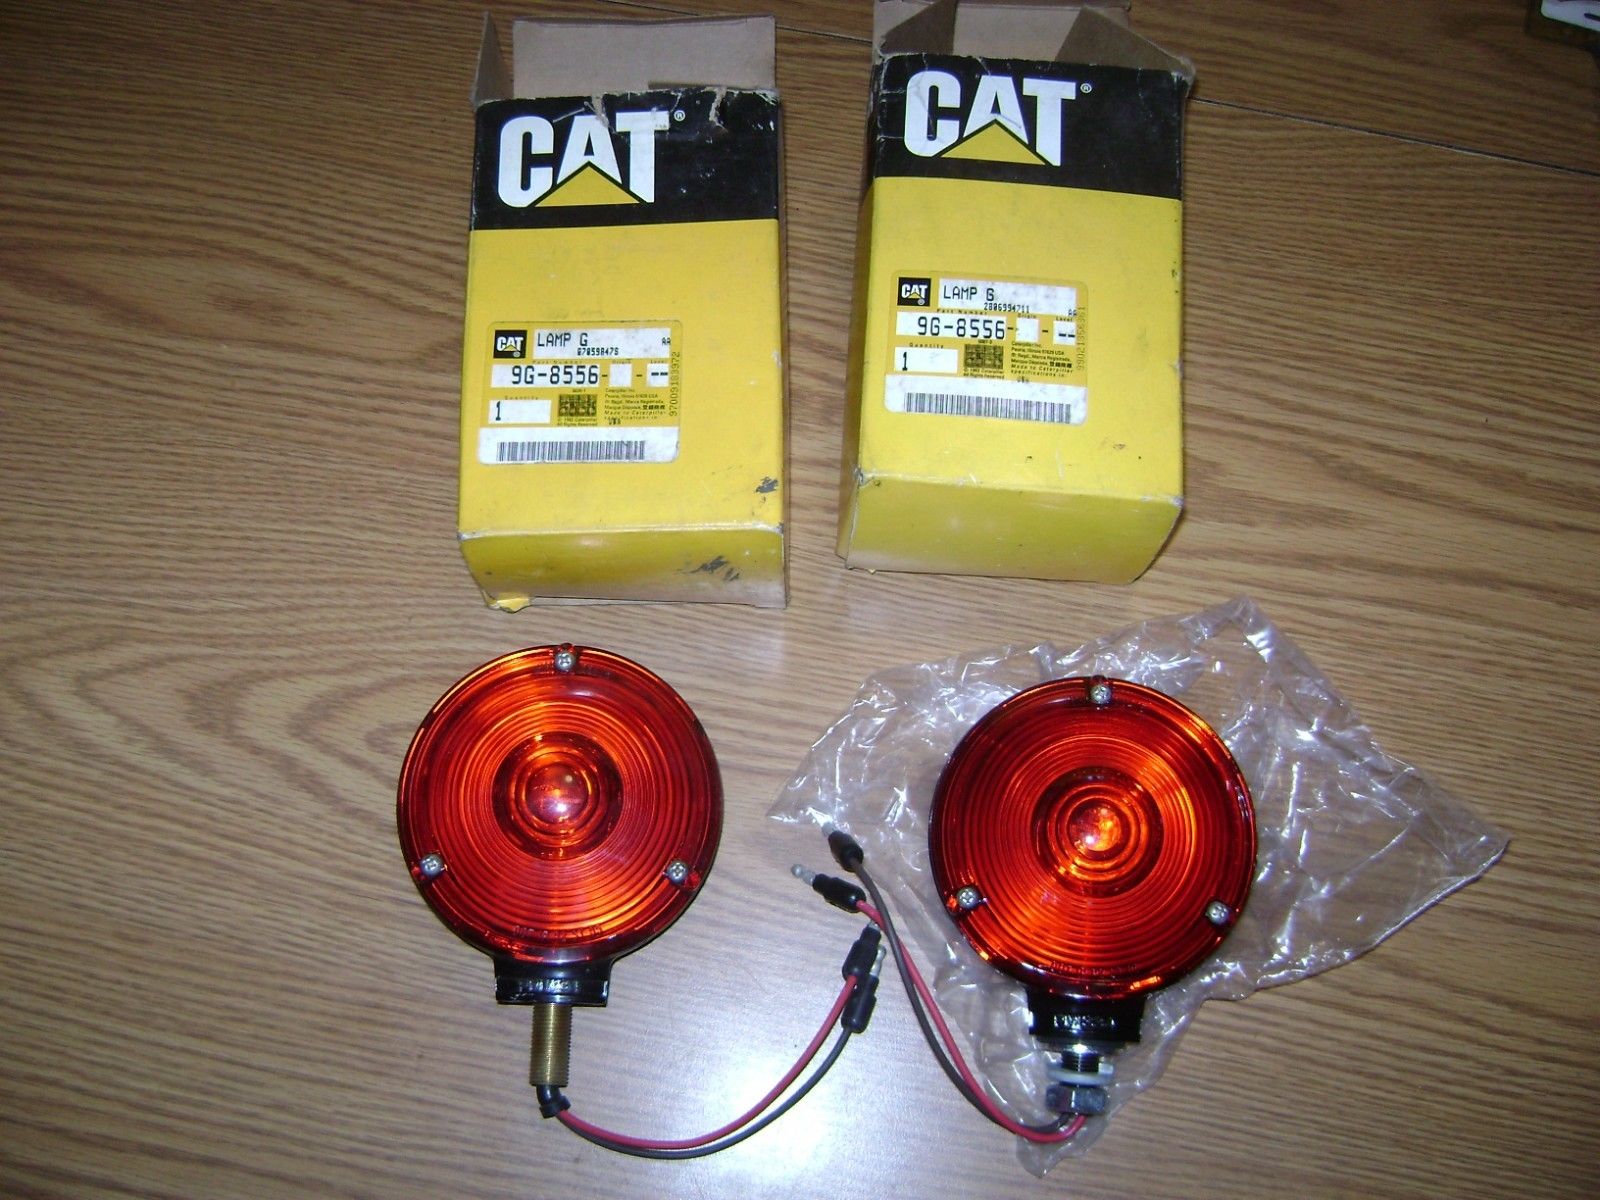 Caterpillar 9G-8556 Signal Lamp, Red